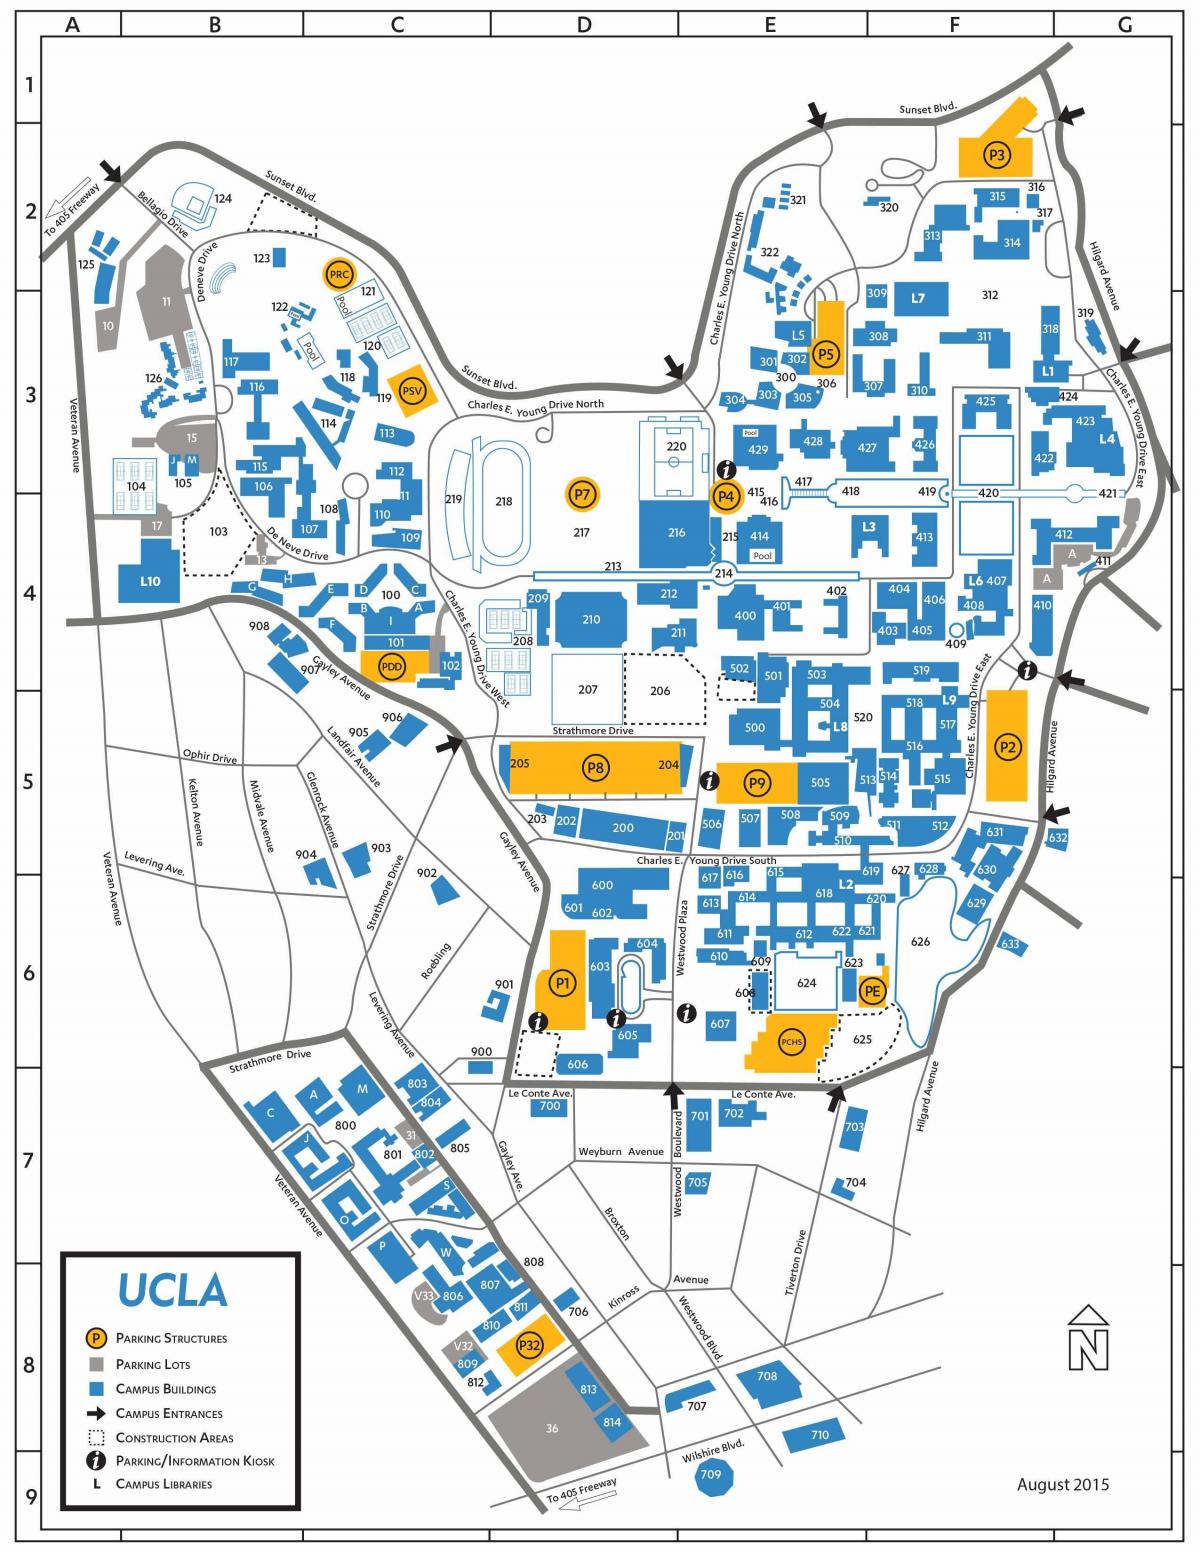 kaart van ucla parkeergelegenheid 